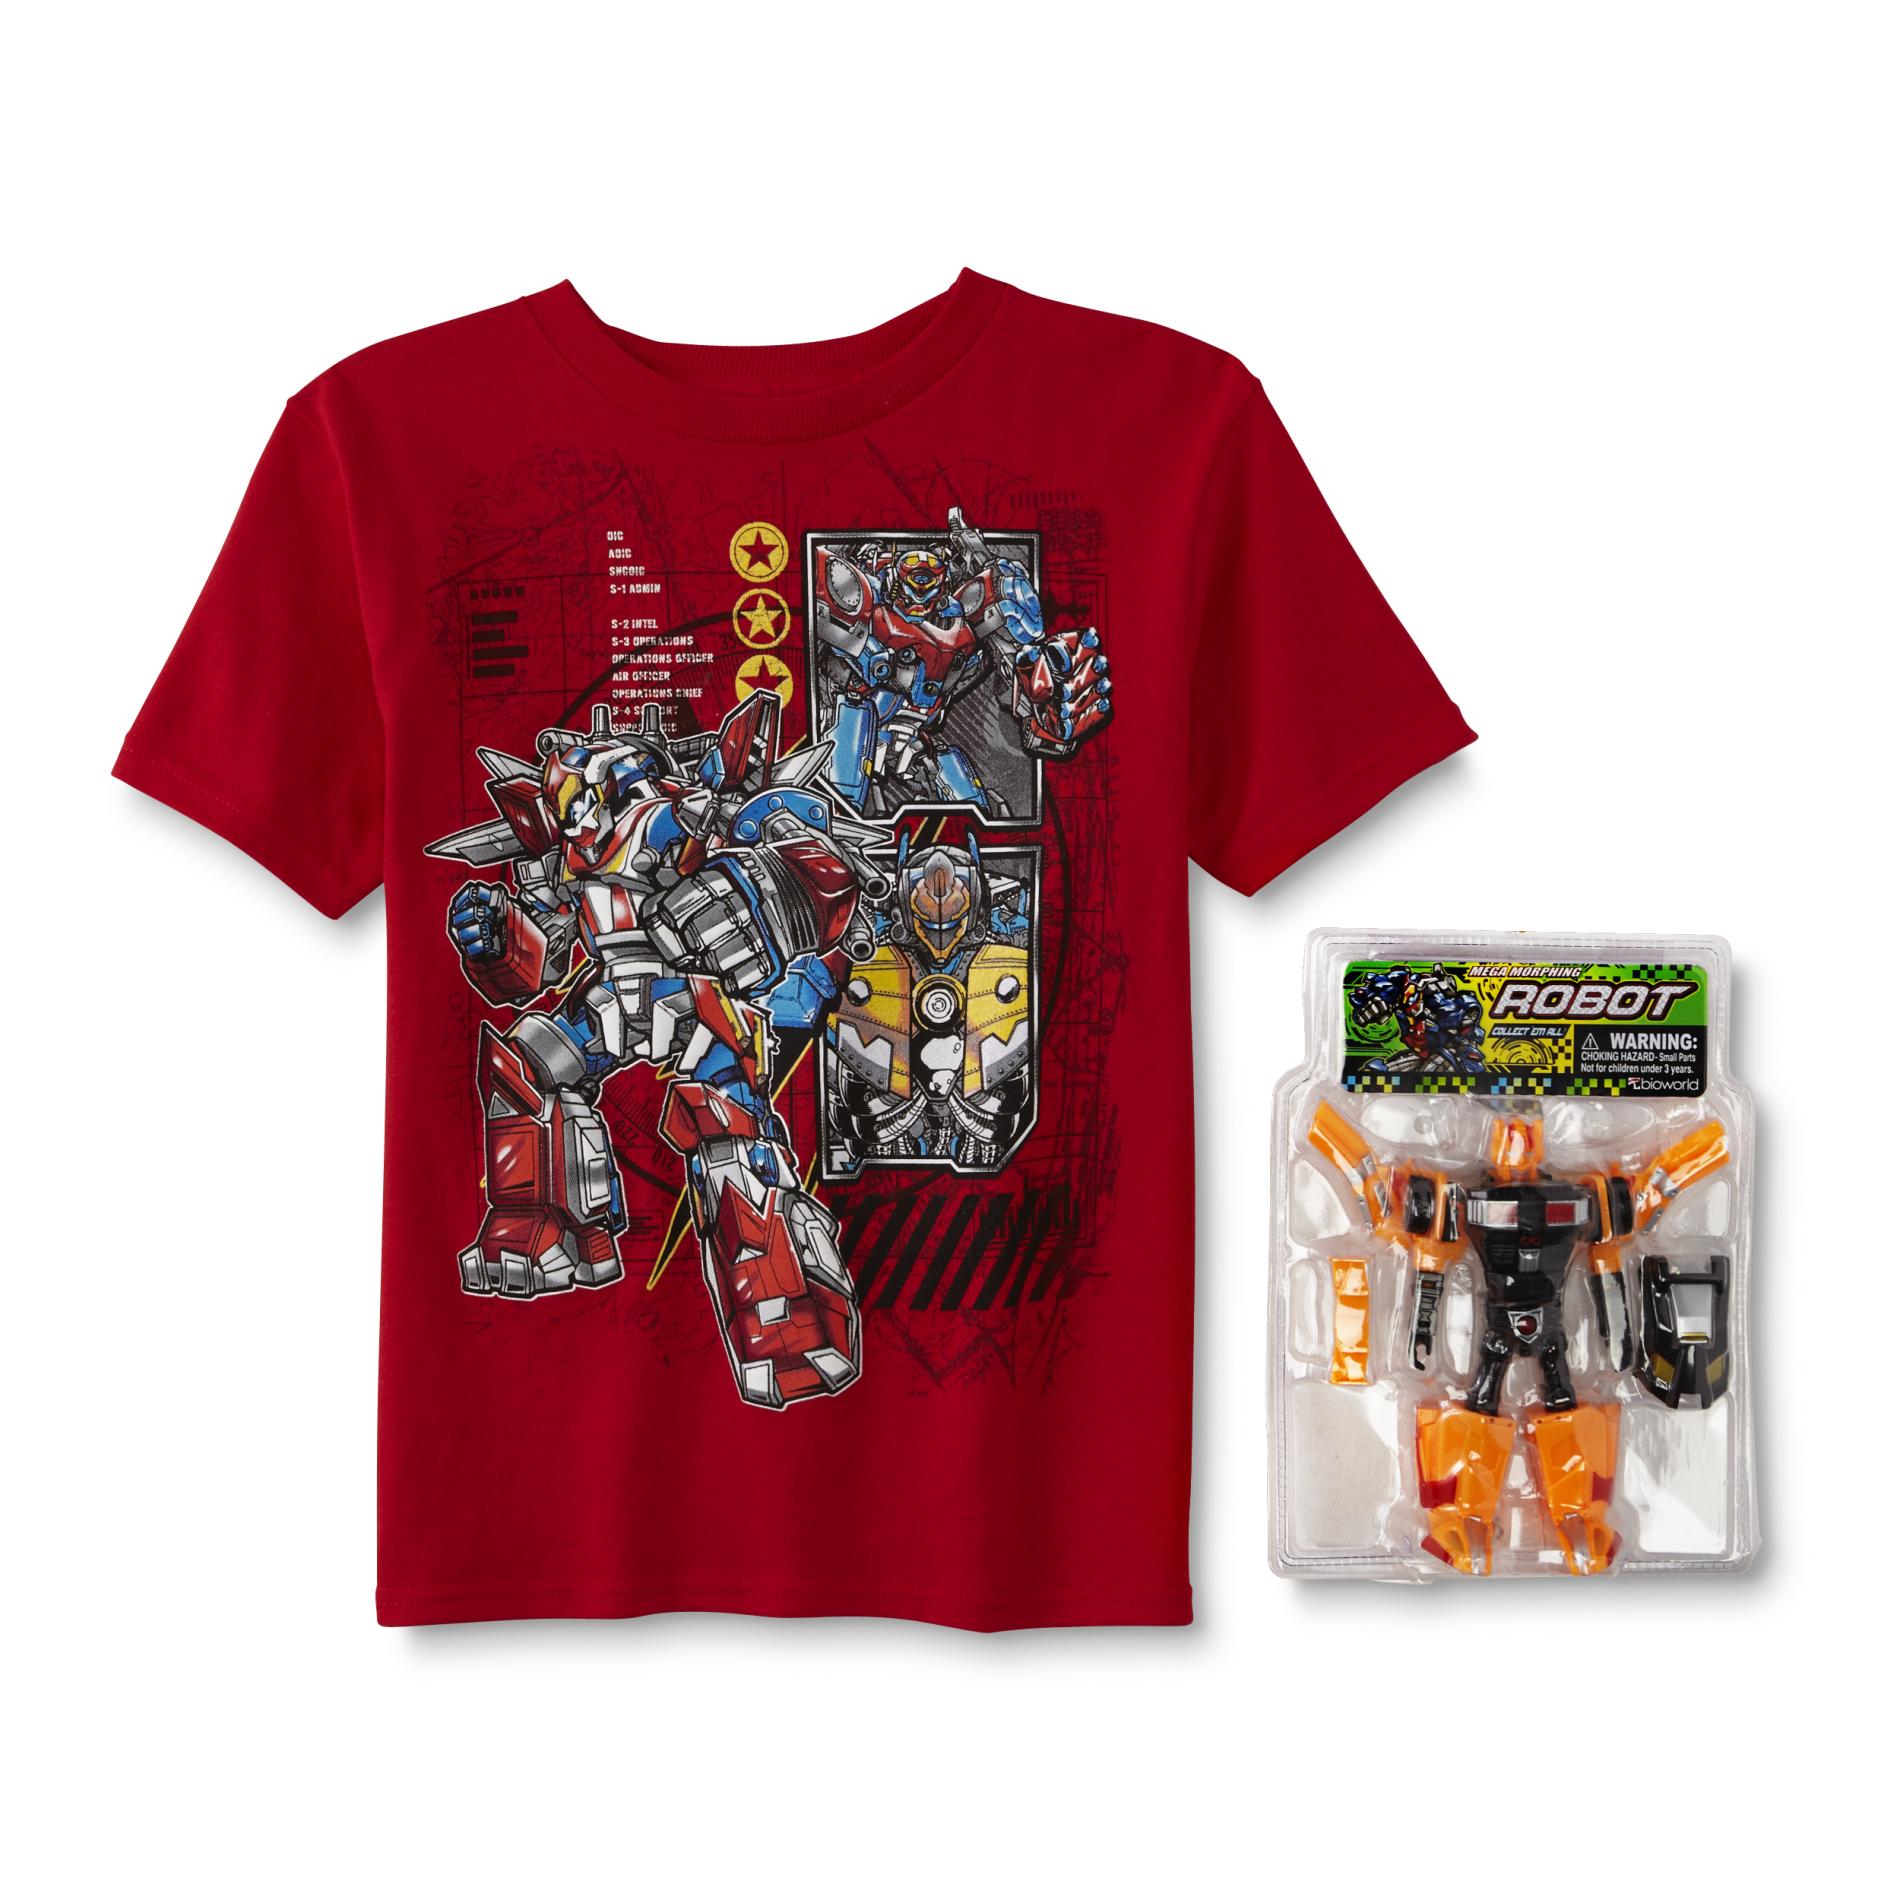 Boy's Graphic T-Shirt & Toy - Robot